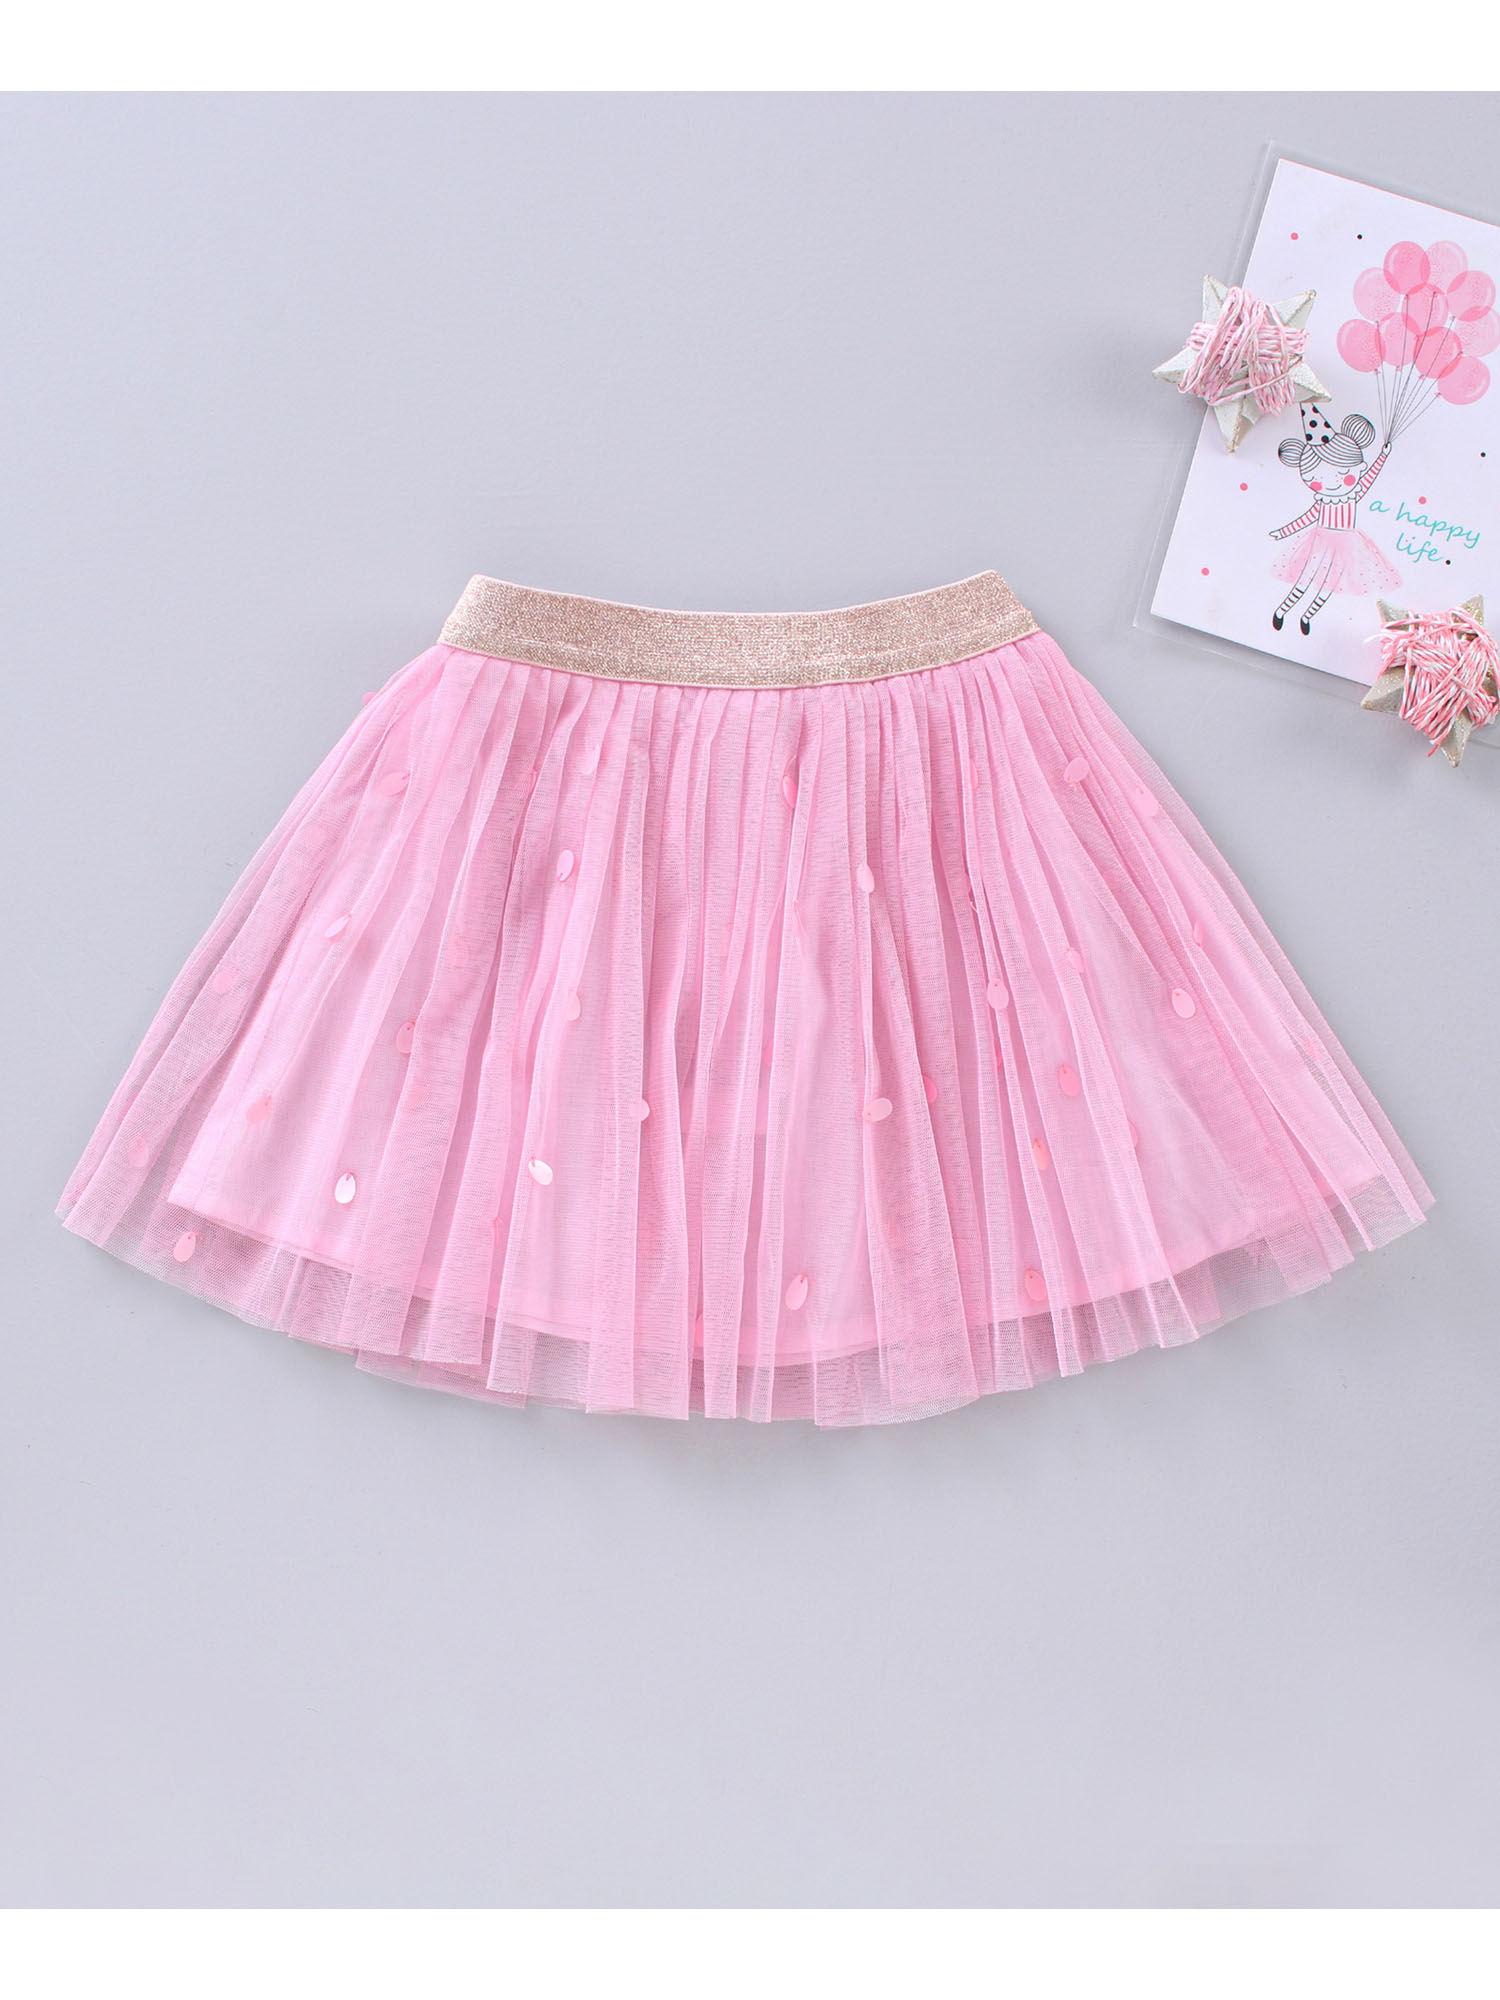 pink sequin tutu skirt